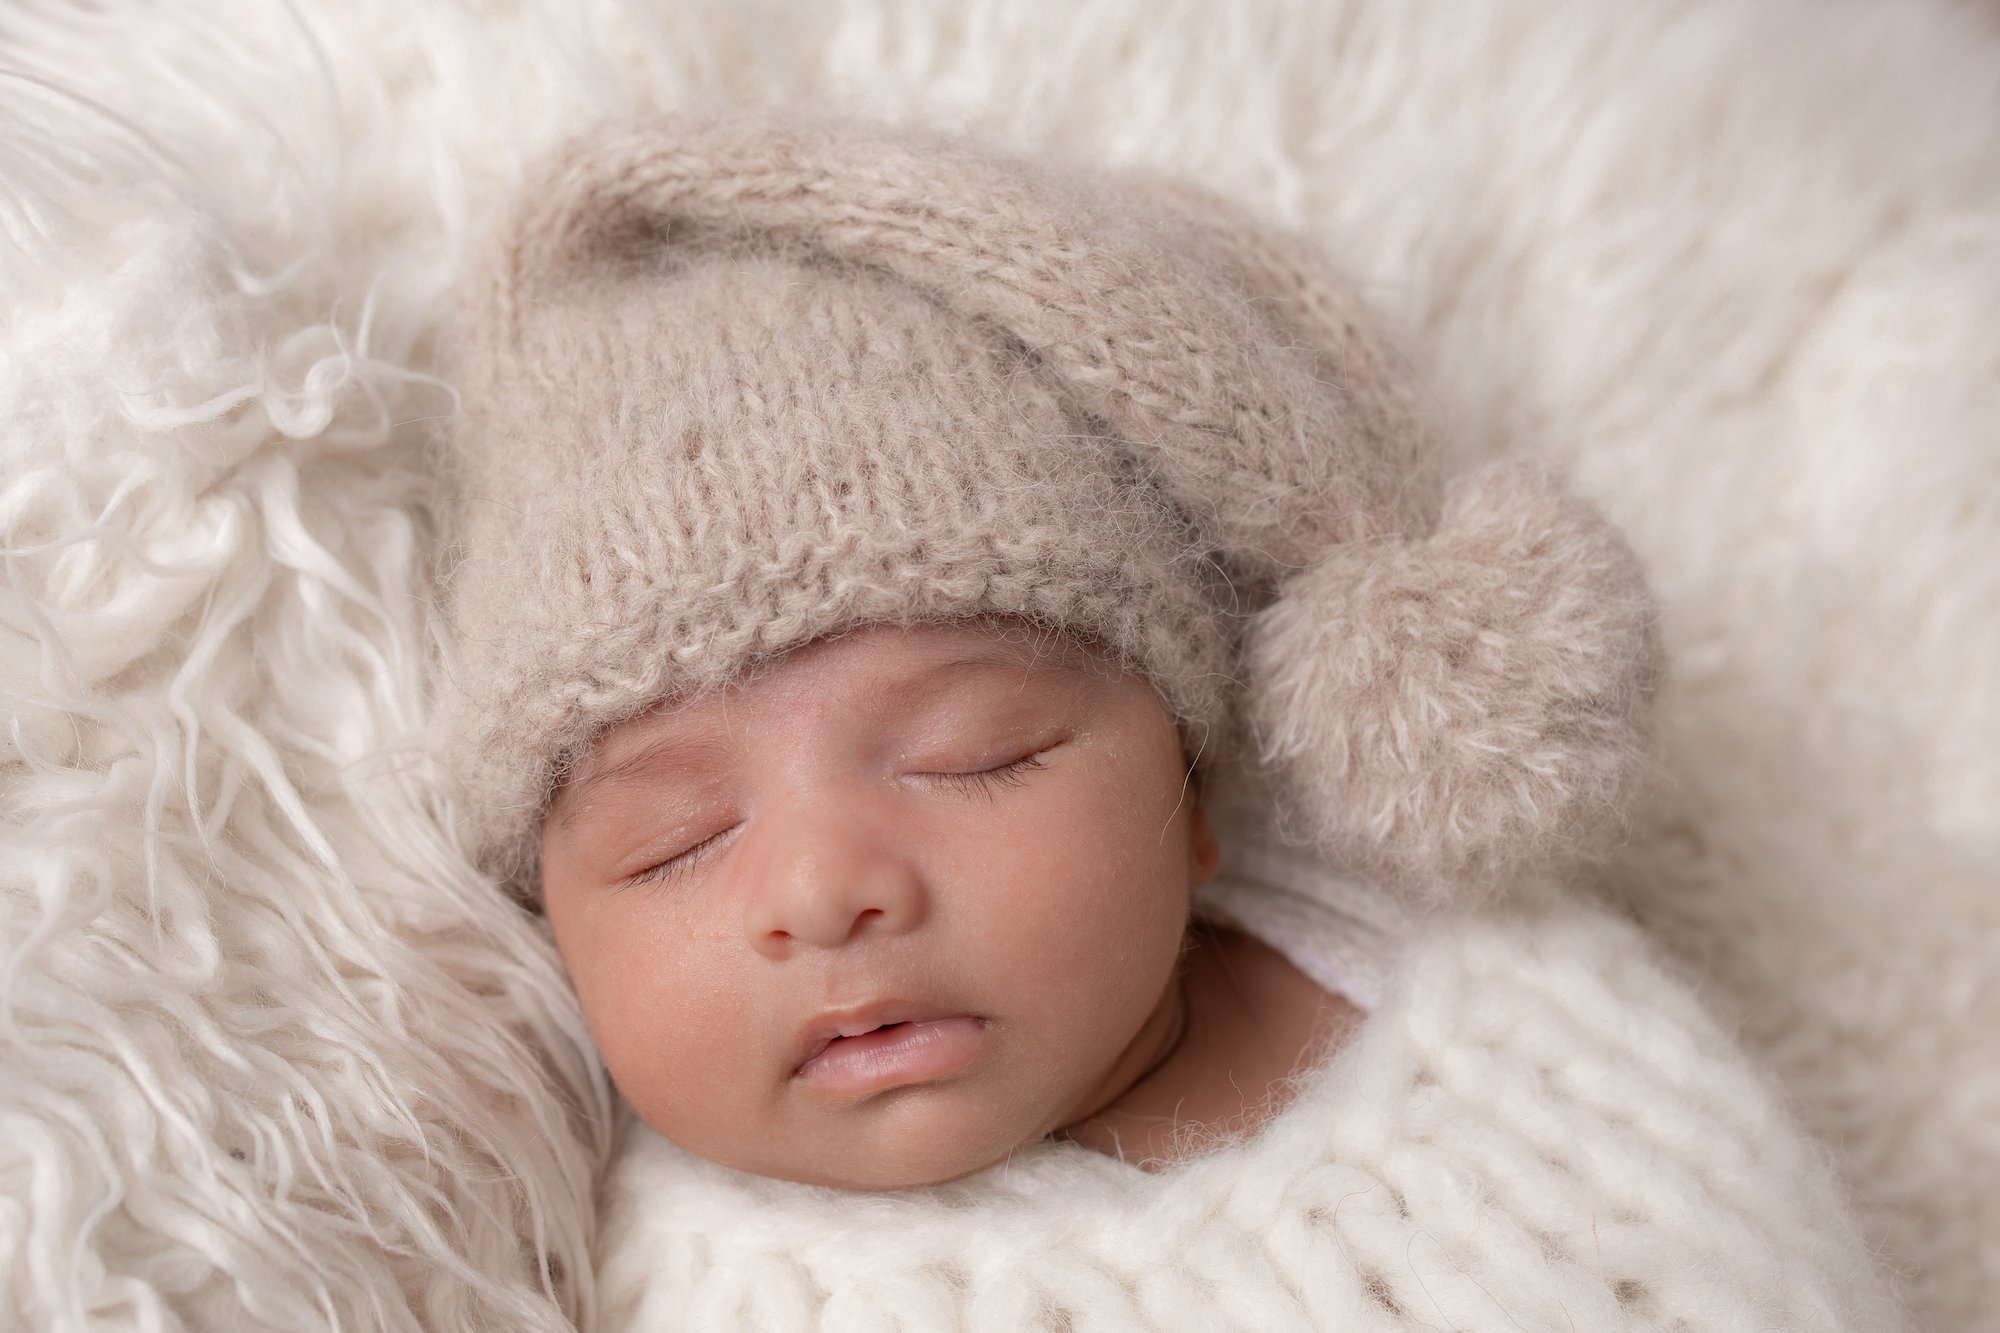 Newborn baby Photographer - Emma Lowe Photography using Creams